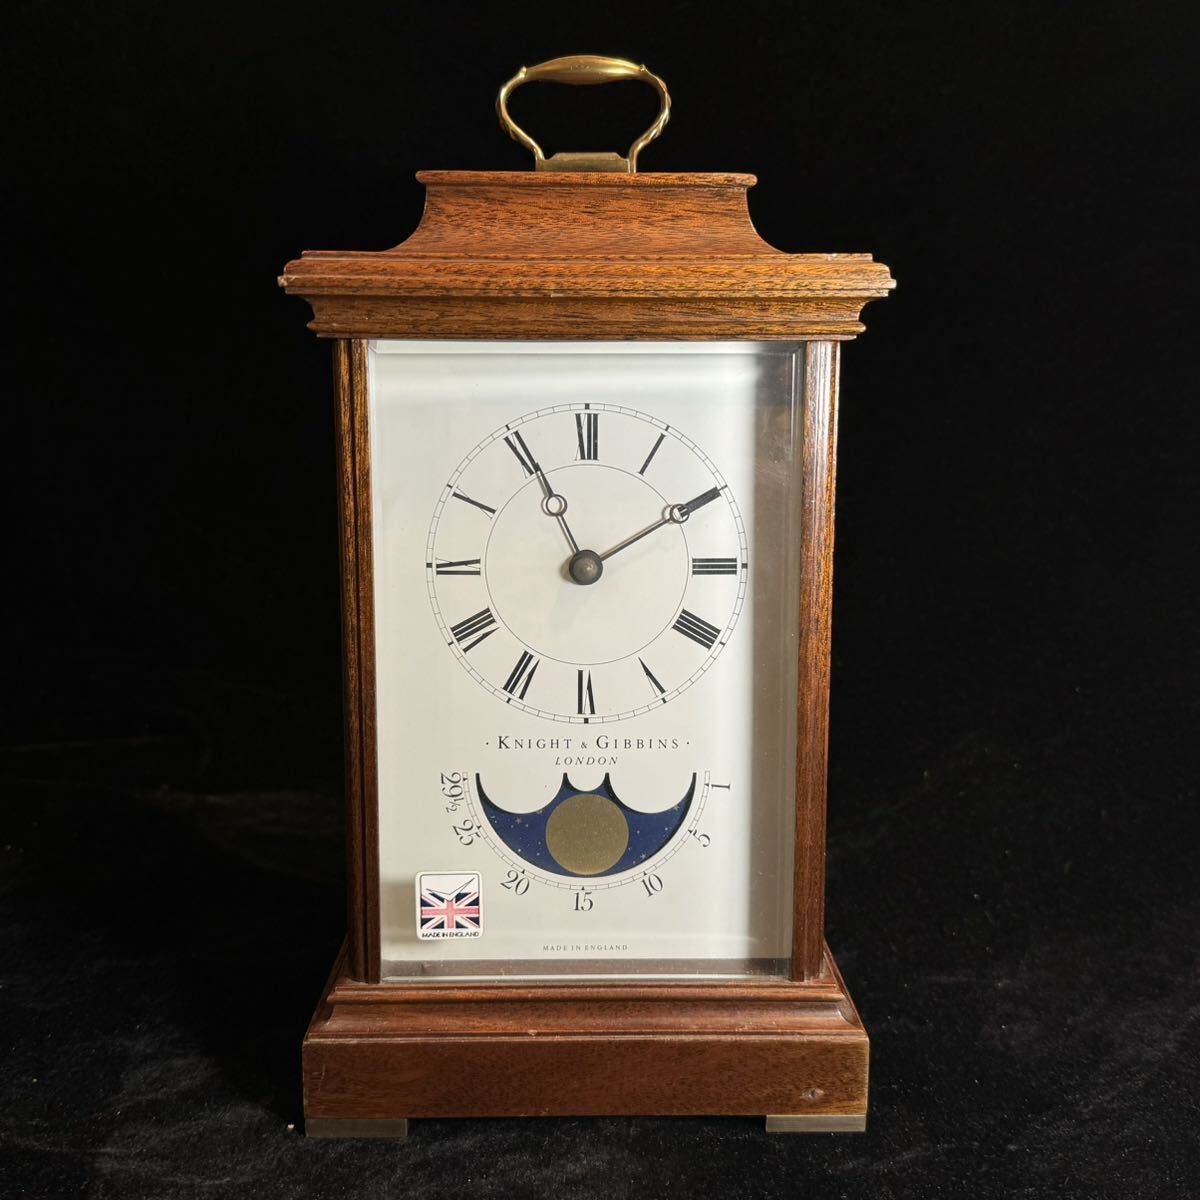 KNIGHT&GIBBINS LONDON 置時計 木製 面取りガラス クオーツ Made in England アンティーク ヴィンテージ 置き時計 ムーンフェイズ_画像1